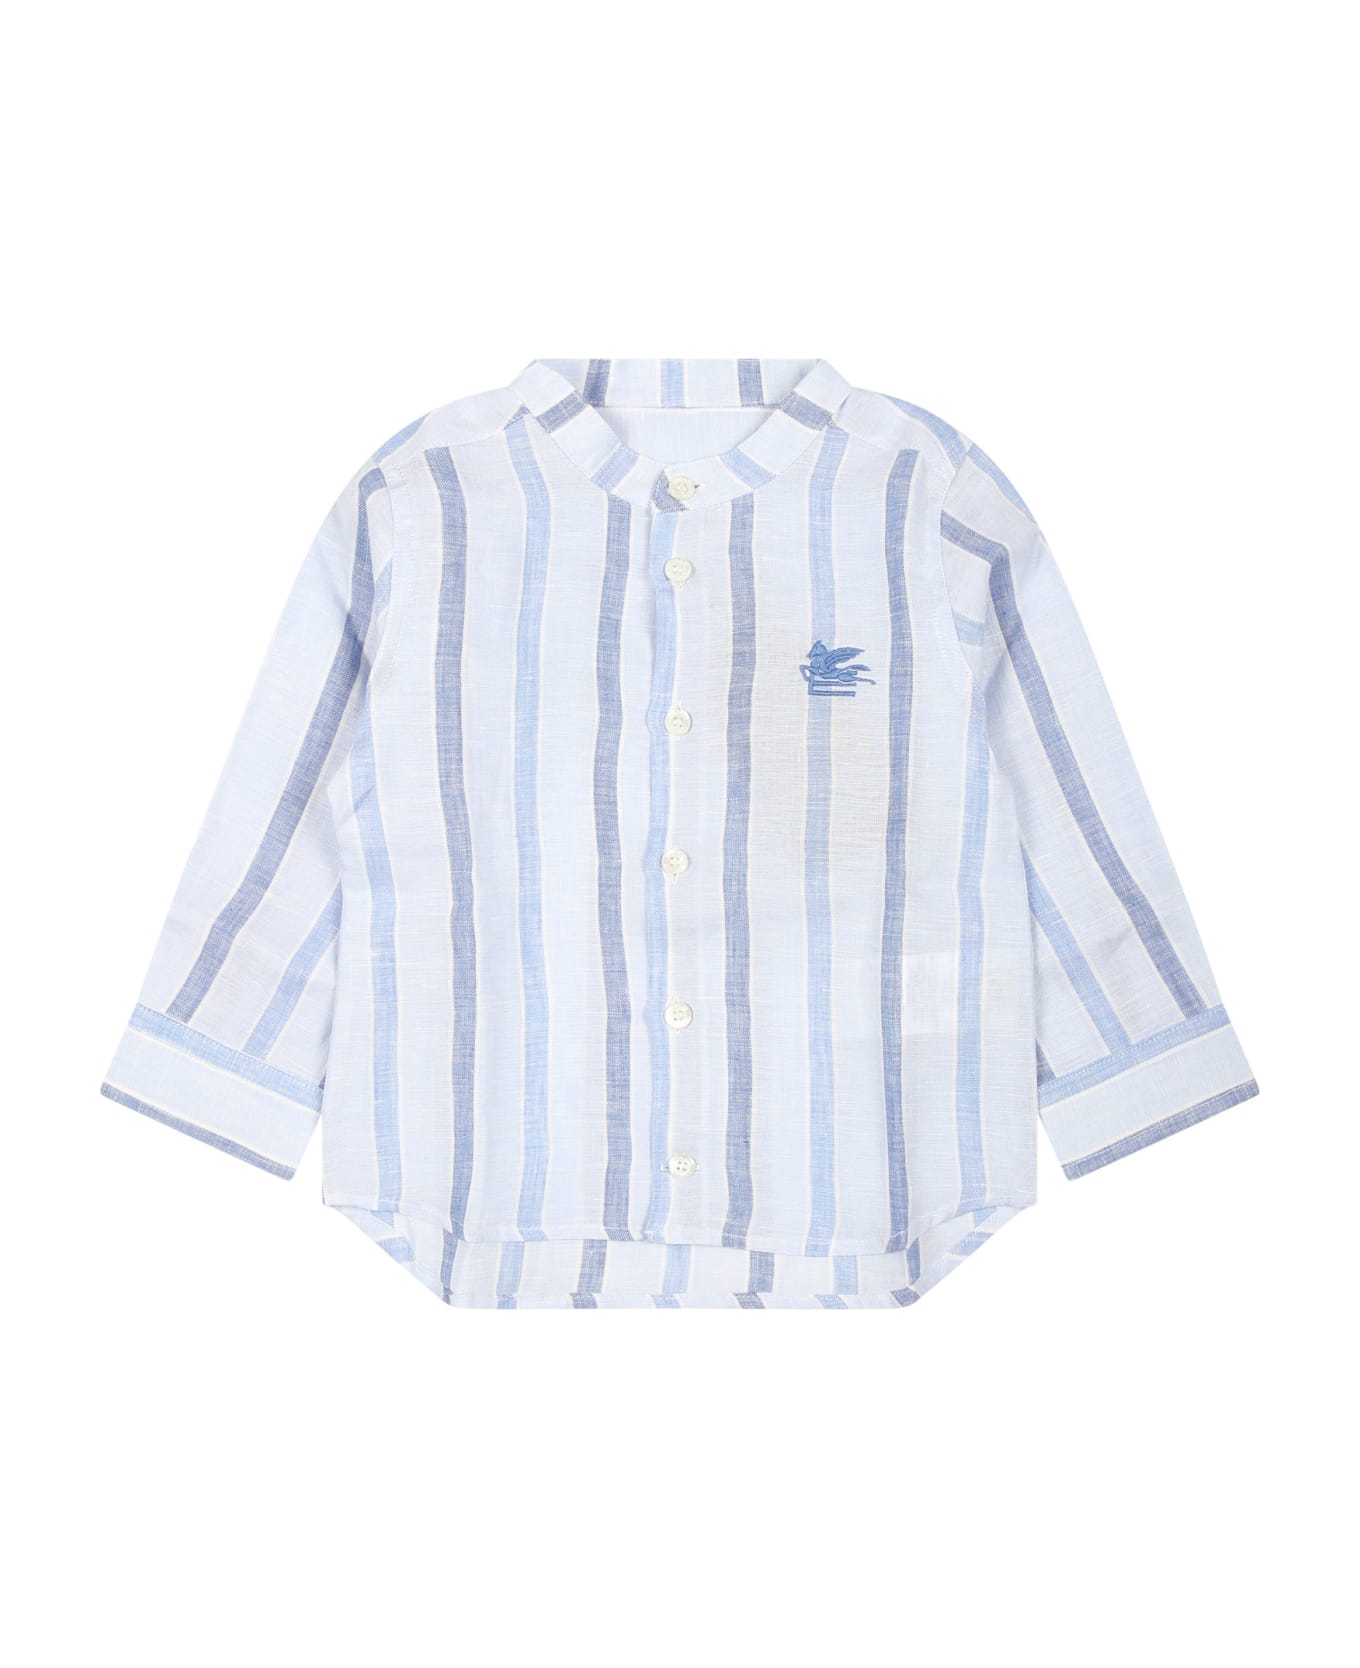 Etro Light Blue Shirt For Baby Boy With Logo - Light Blue